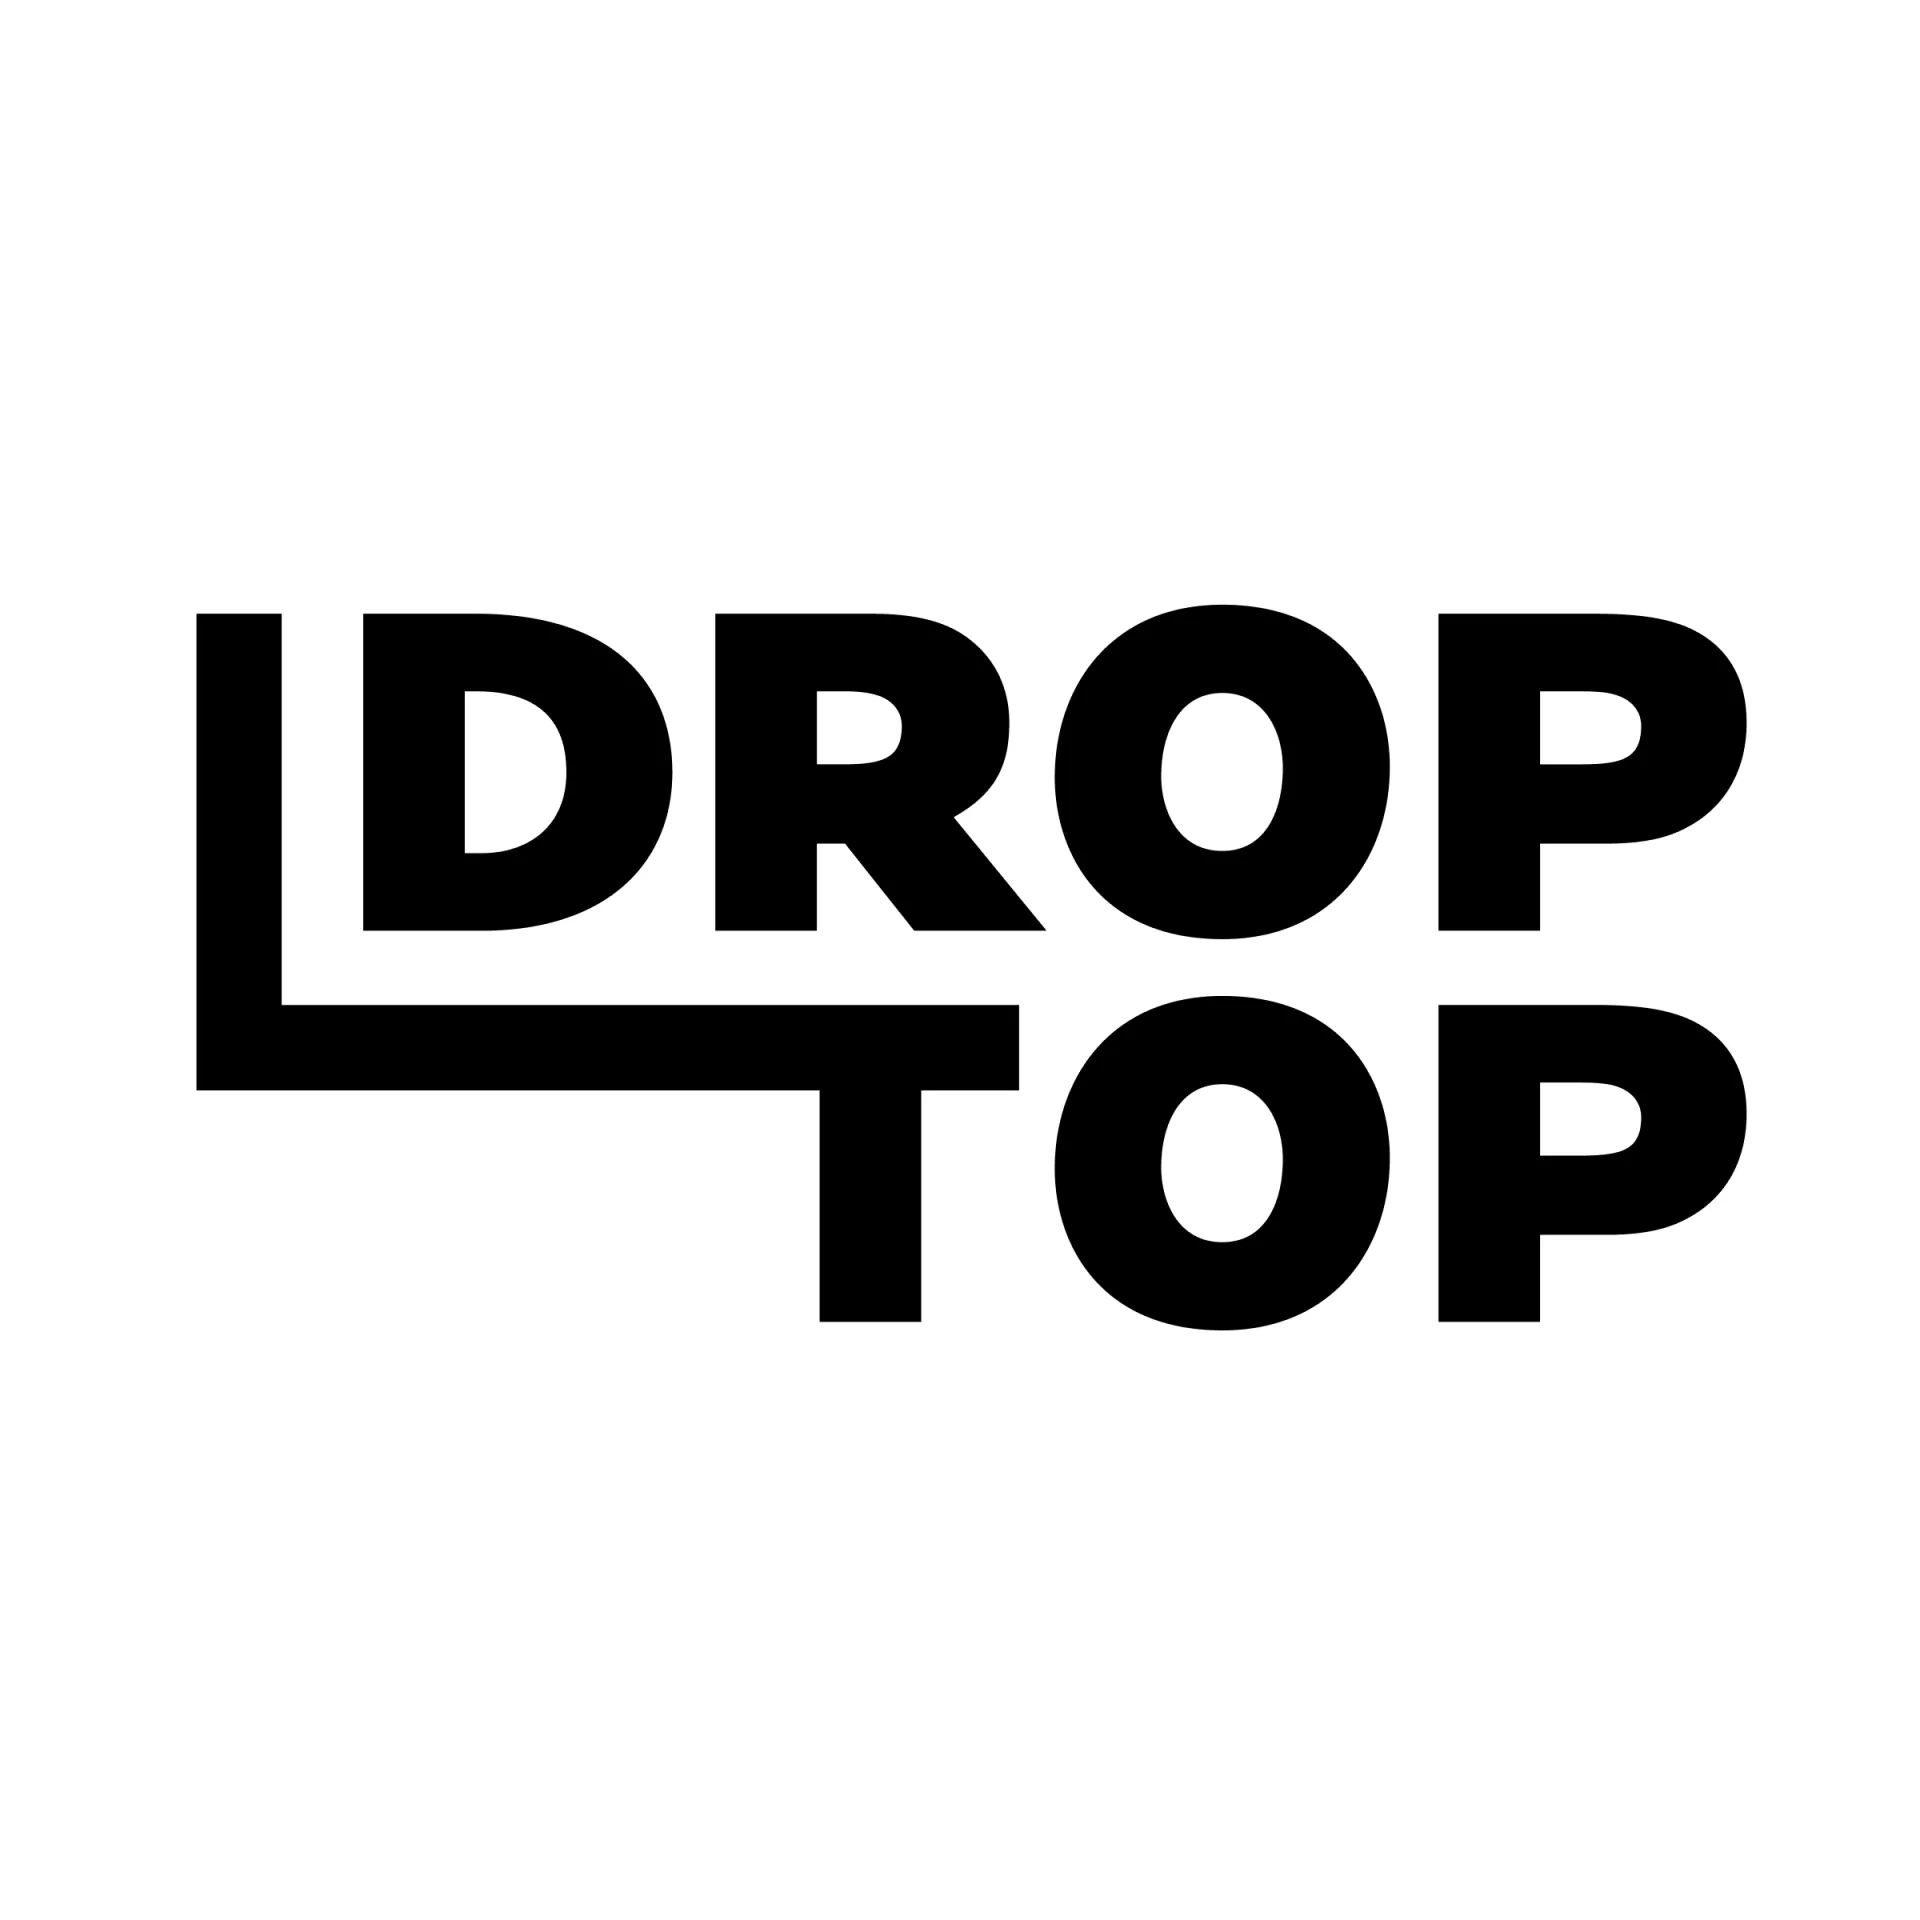 DropTop logo REVISED